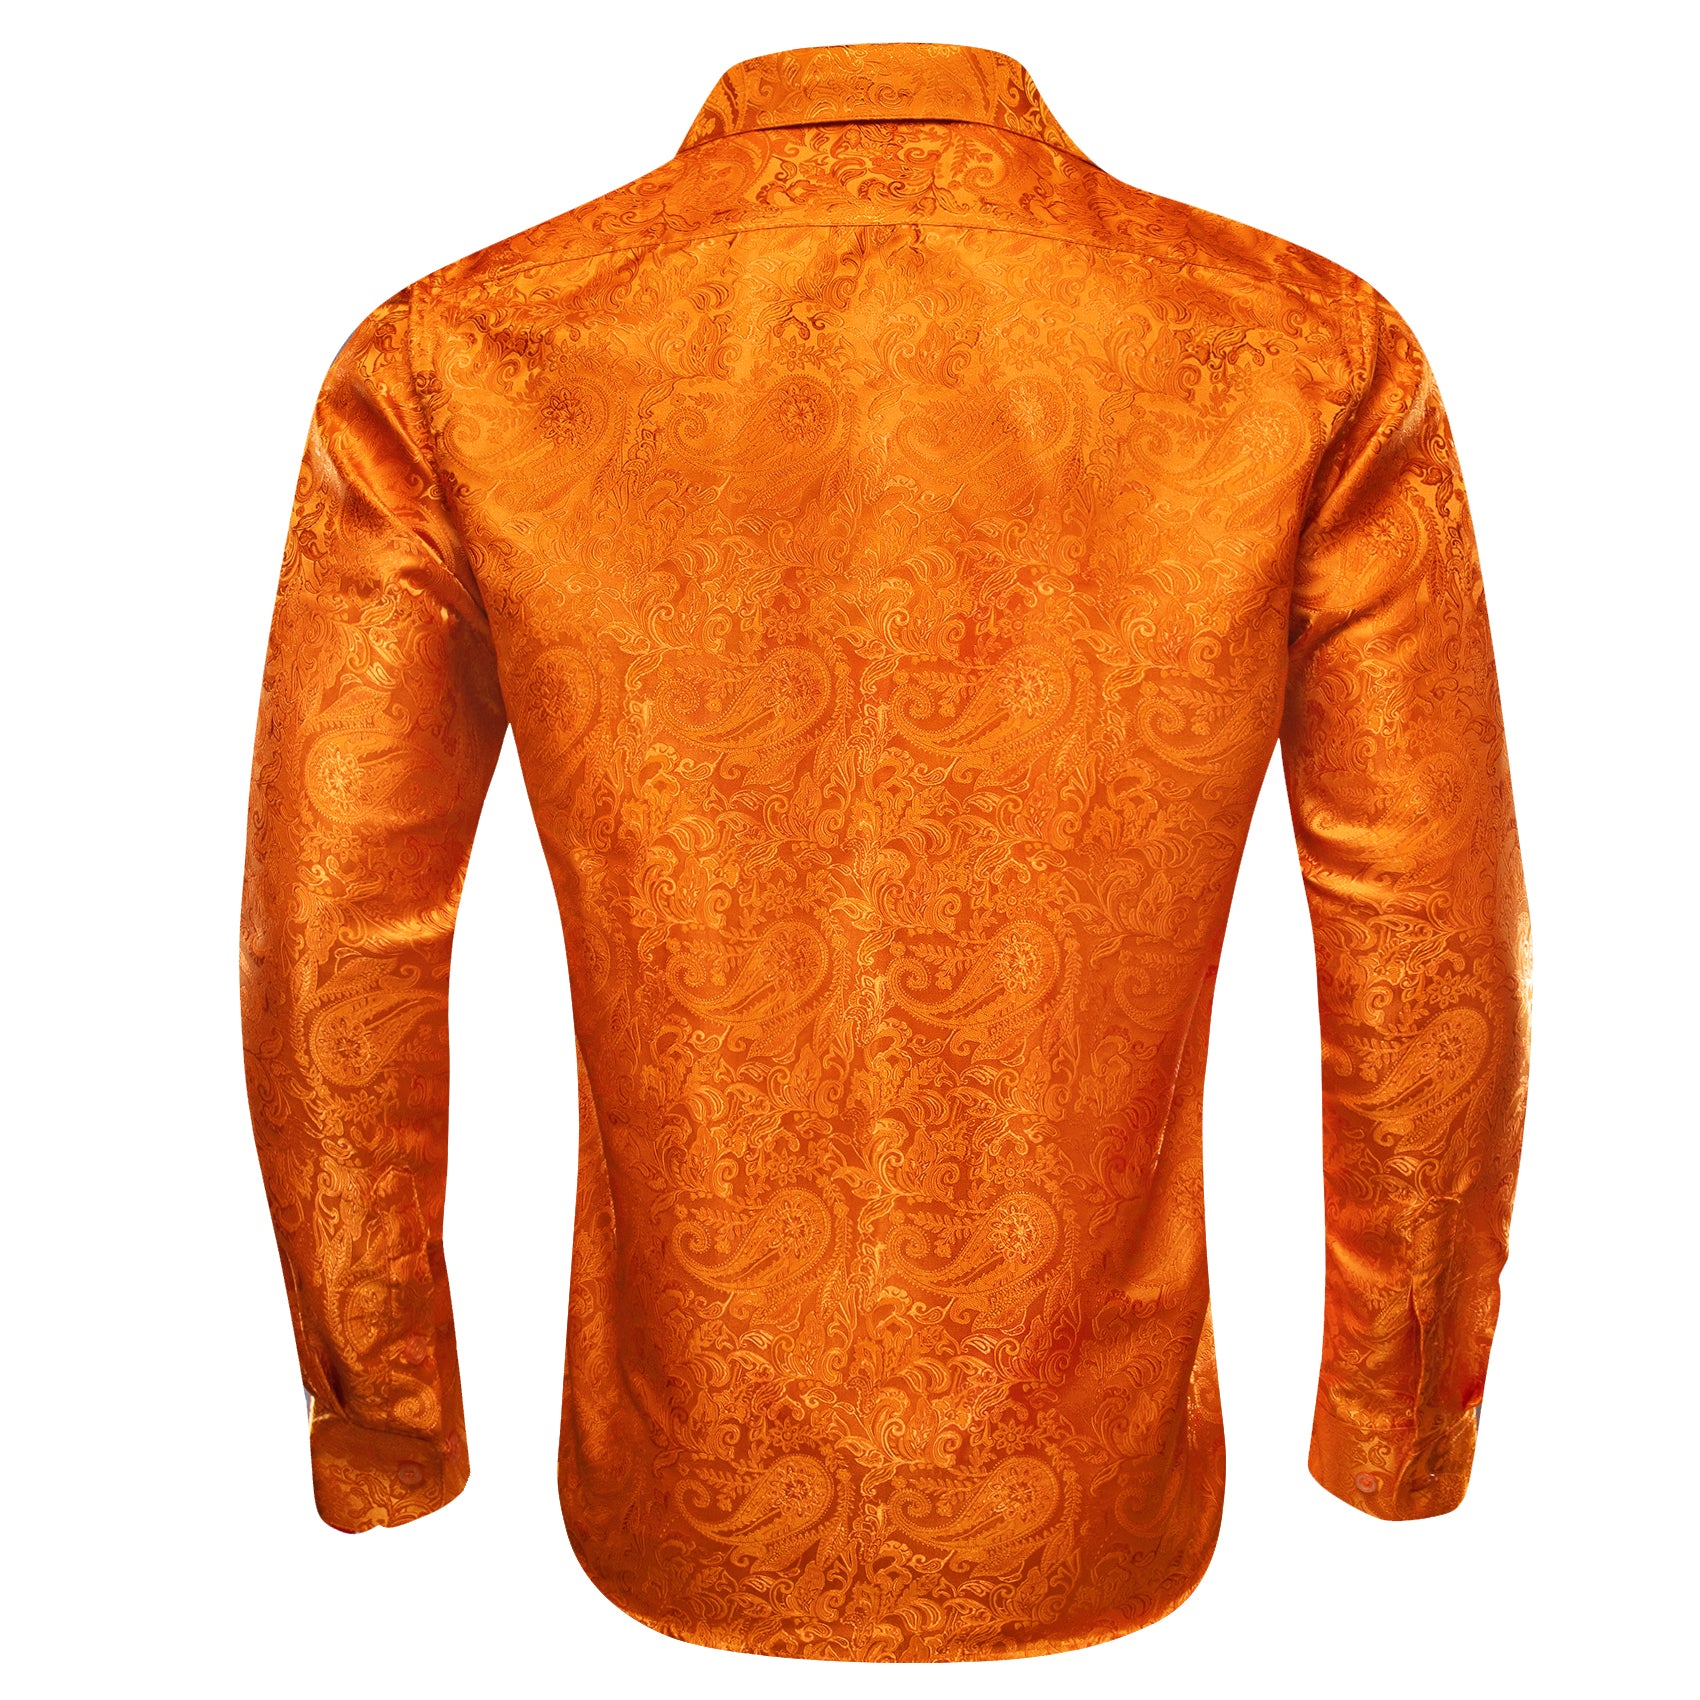 Barry.wang Orange Paisley Men's Silk Shirt